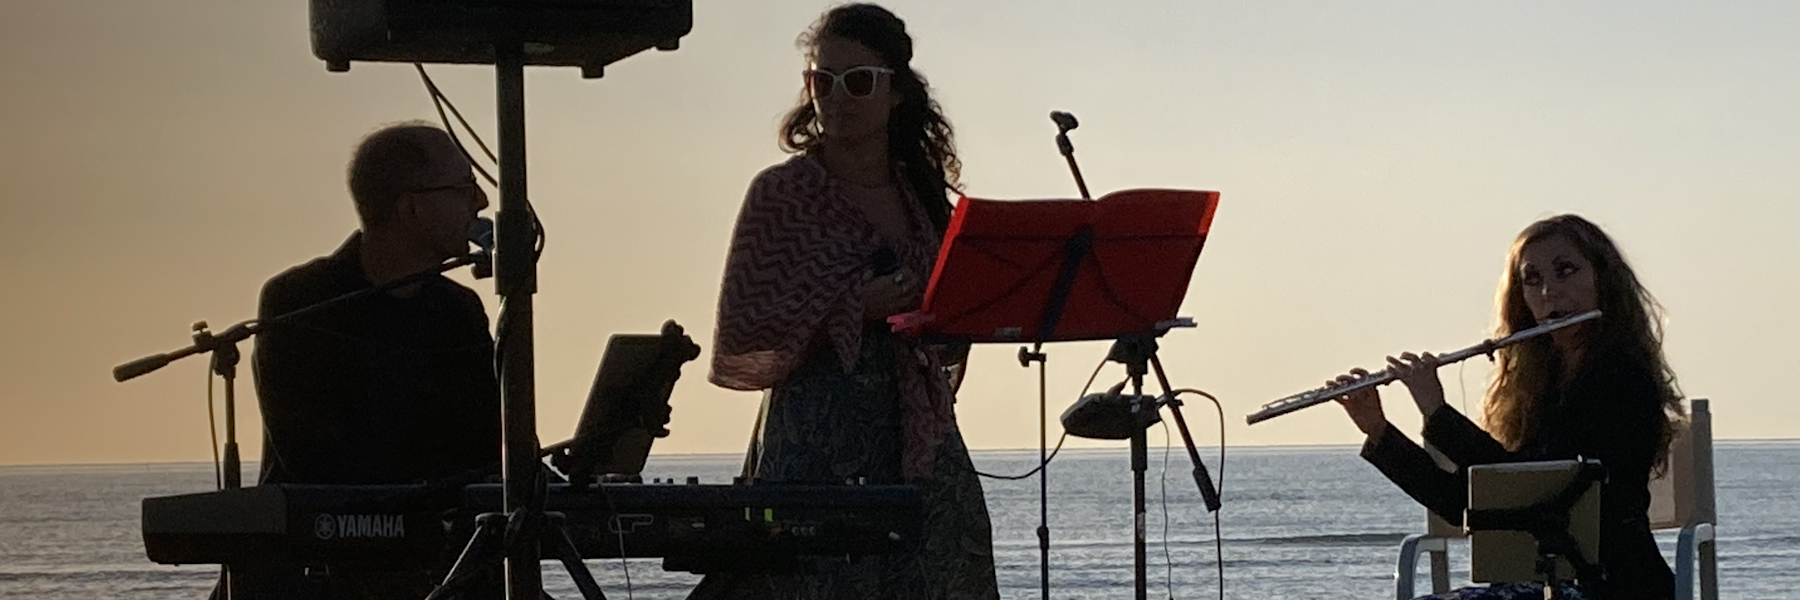 Tagesanbruch-Konzerte am Strand in Tagliata 